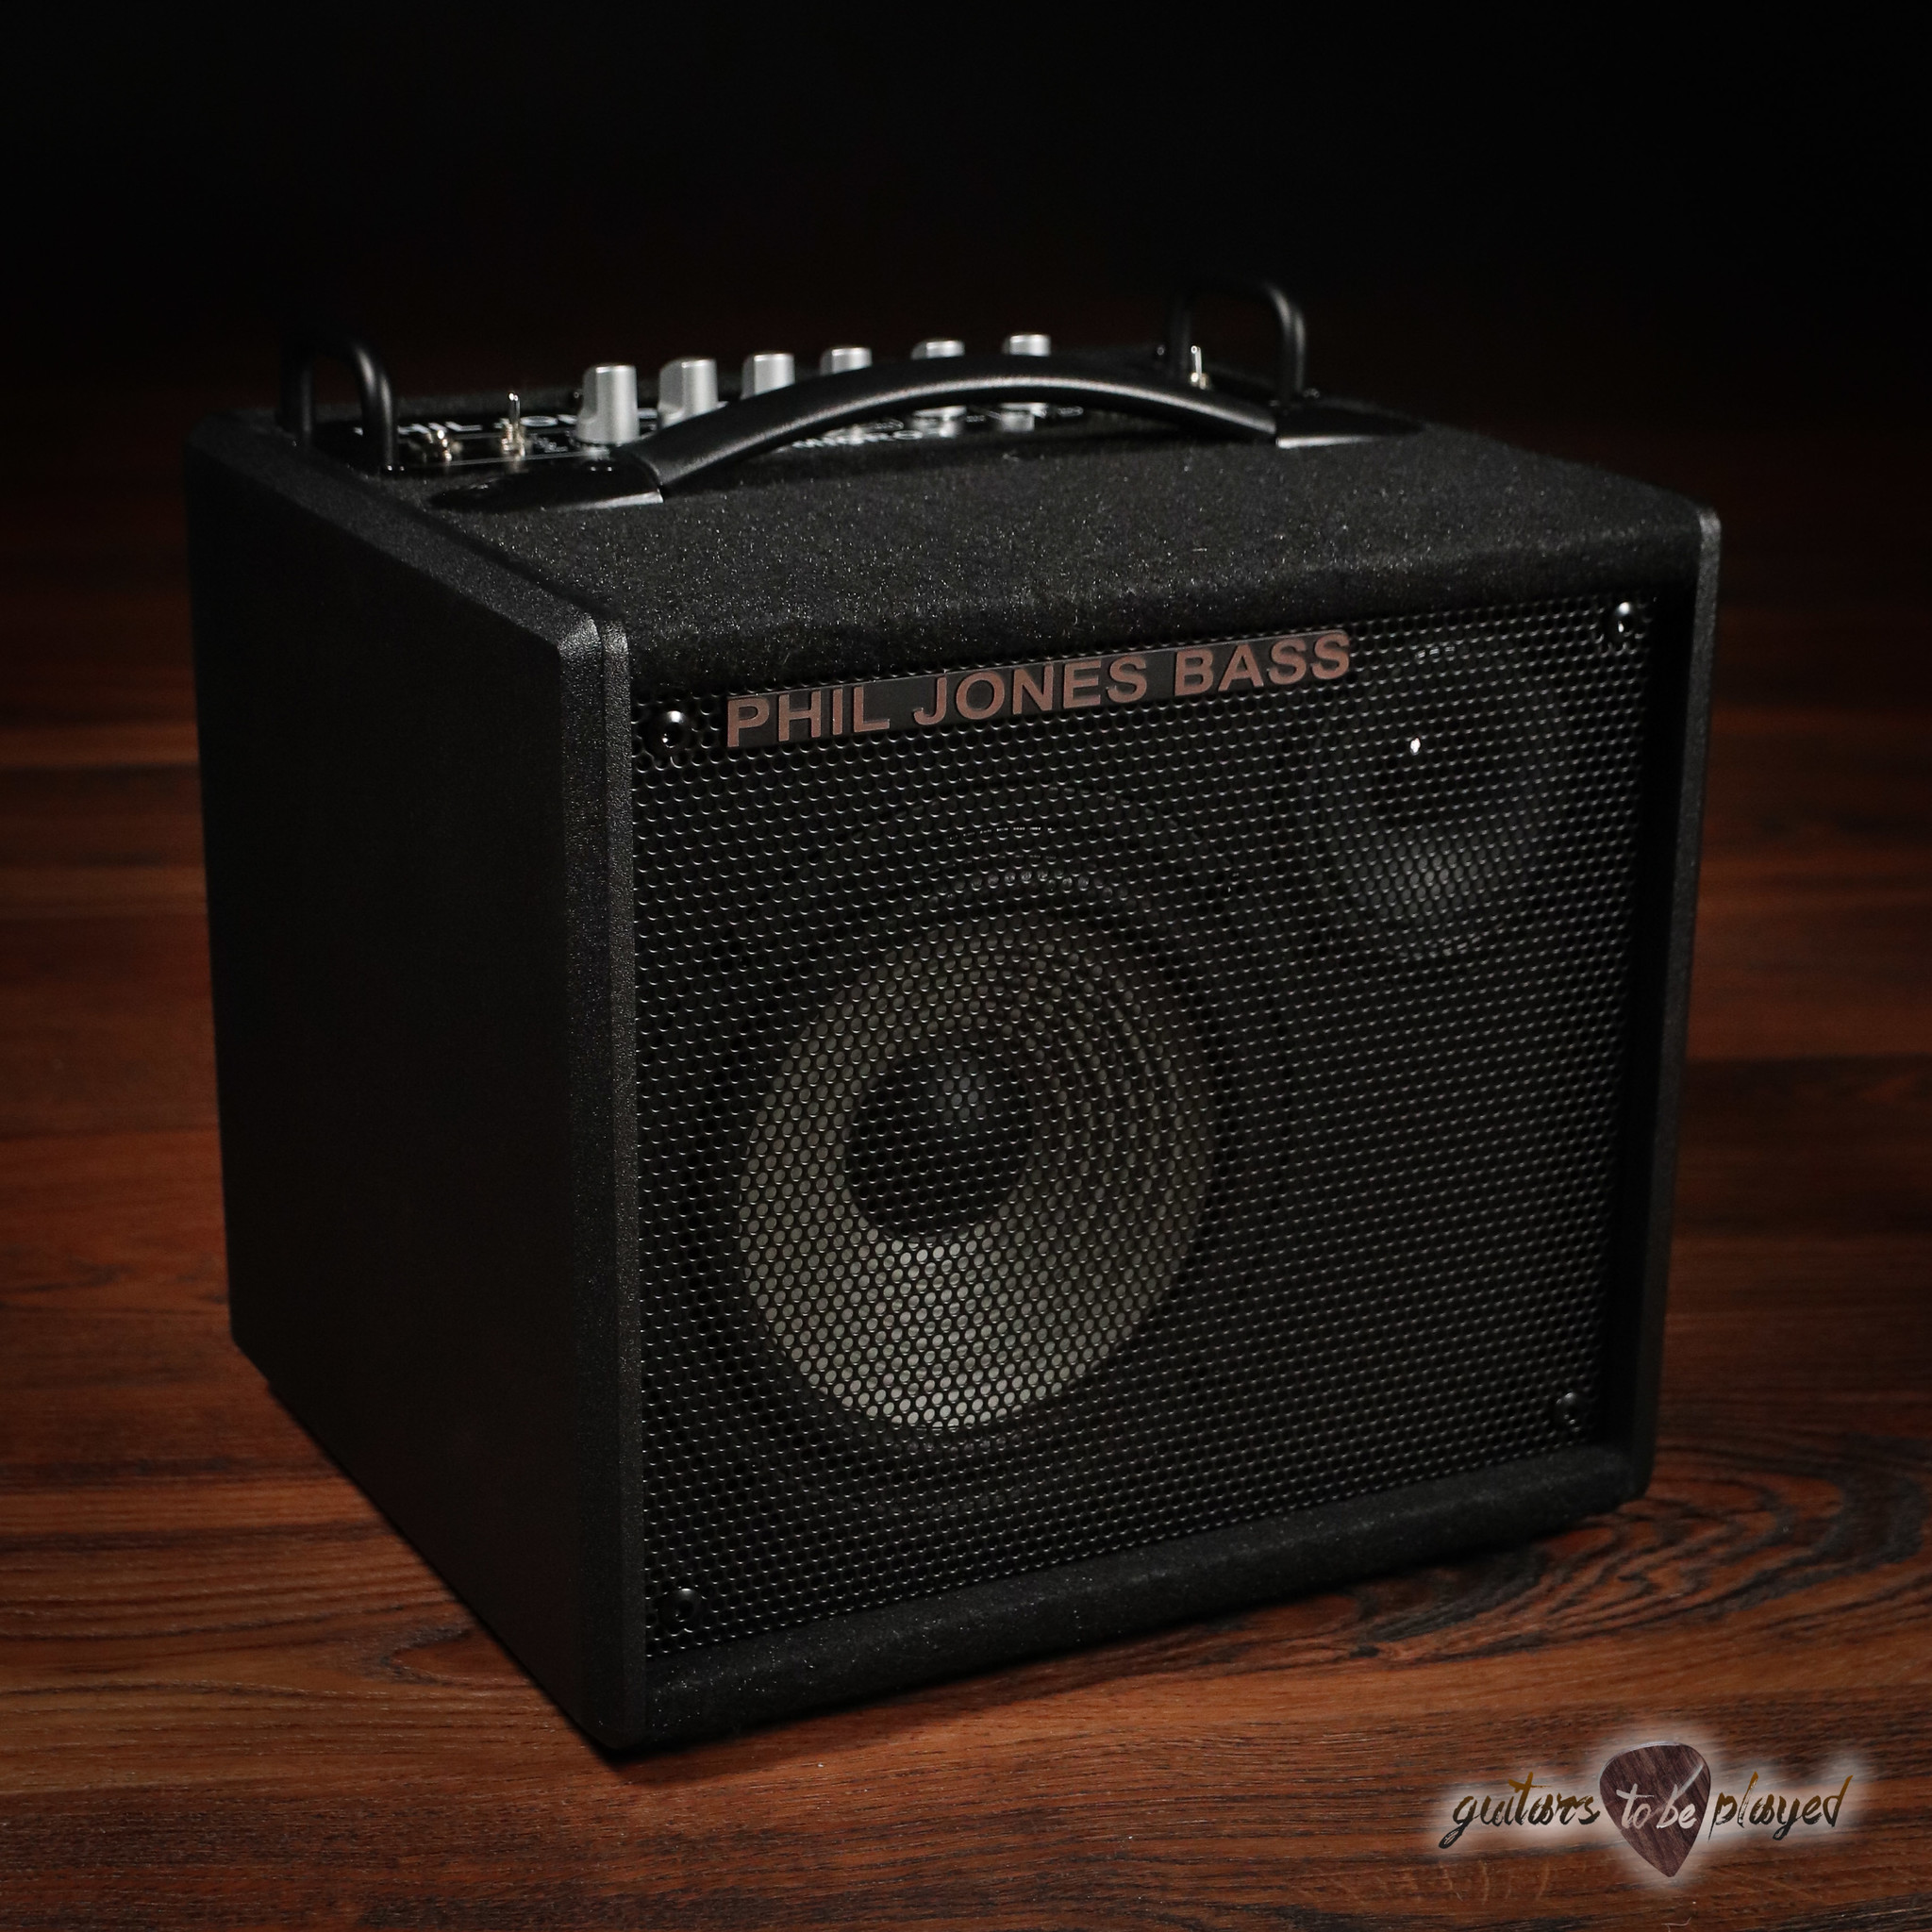 Phil Jones Bass MICRO 7 (M-7) 1x7” 50W Super Compact Bass Combo Amp